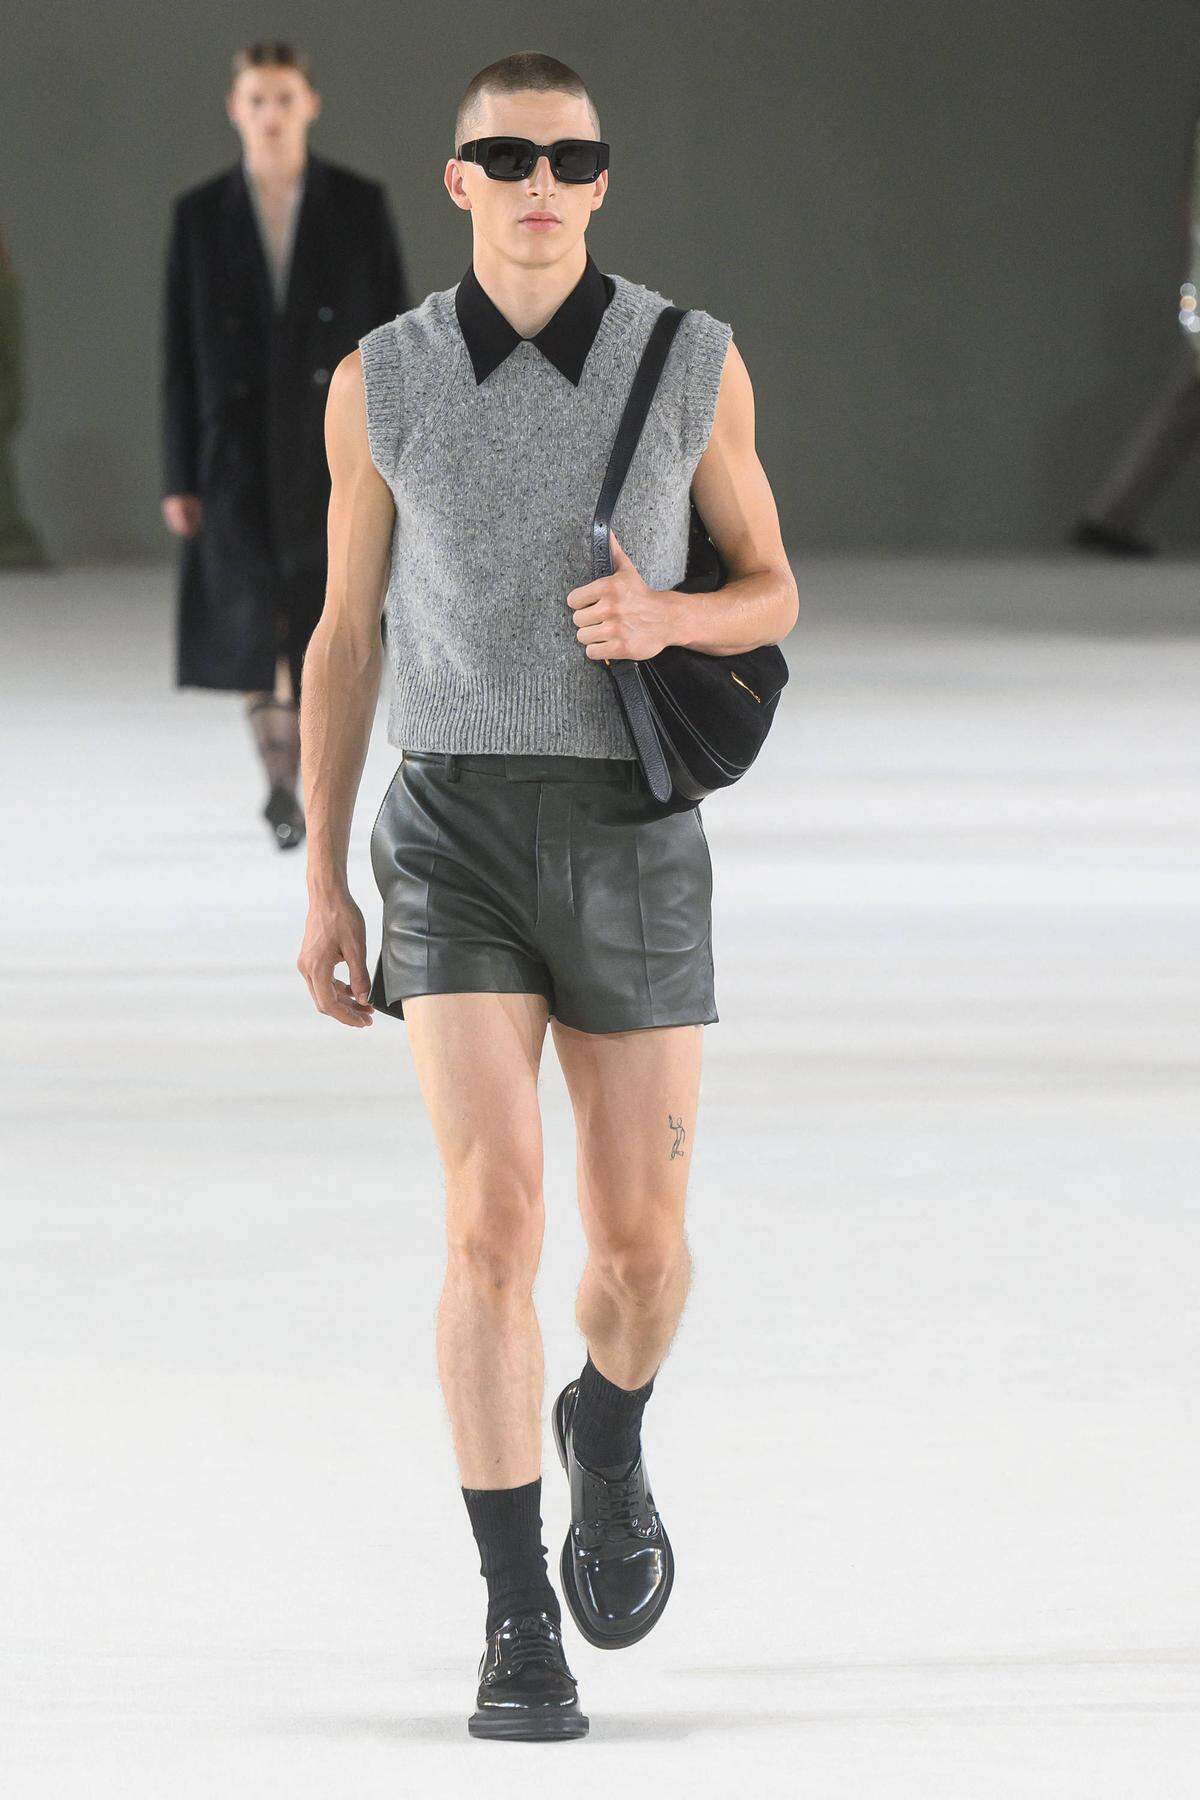 Lederne Hotpants für Männer zeigt AMI Alexandre Mattiussi.